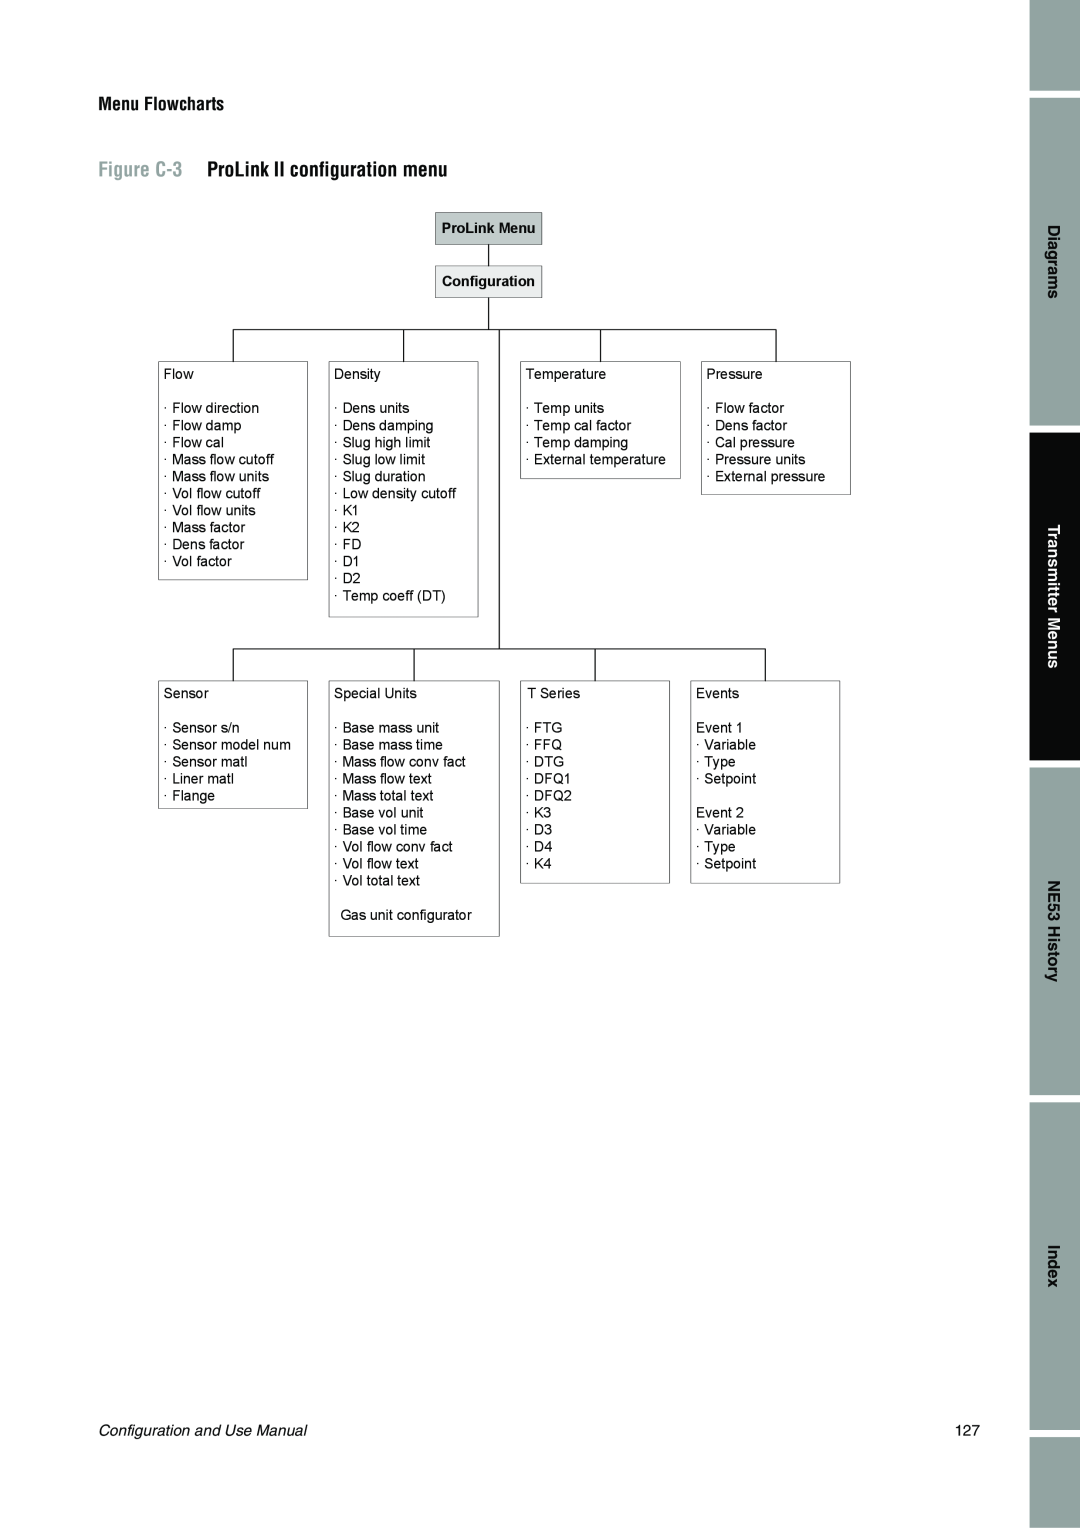 Emerson Process Management 1500 Figure C-3 ProLink II configuration menu, Menu Flowcharts, Diagrams, Transmitter Menus 